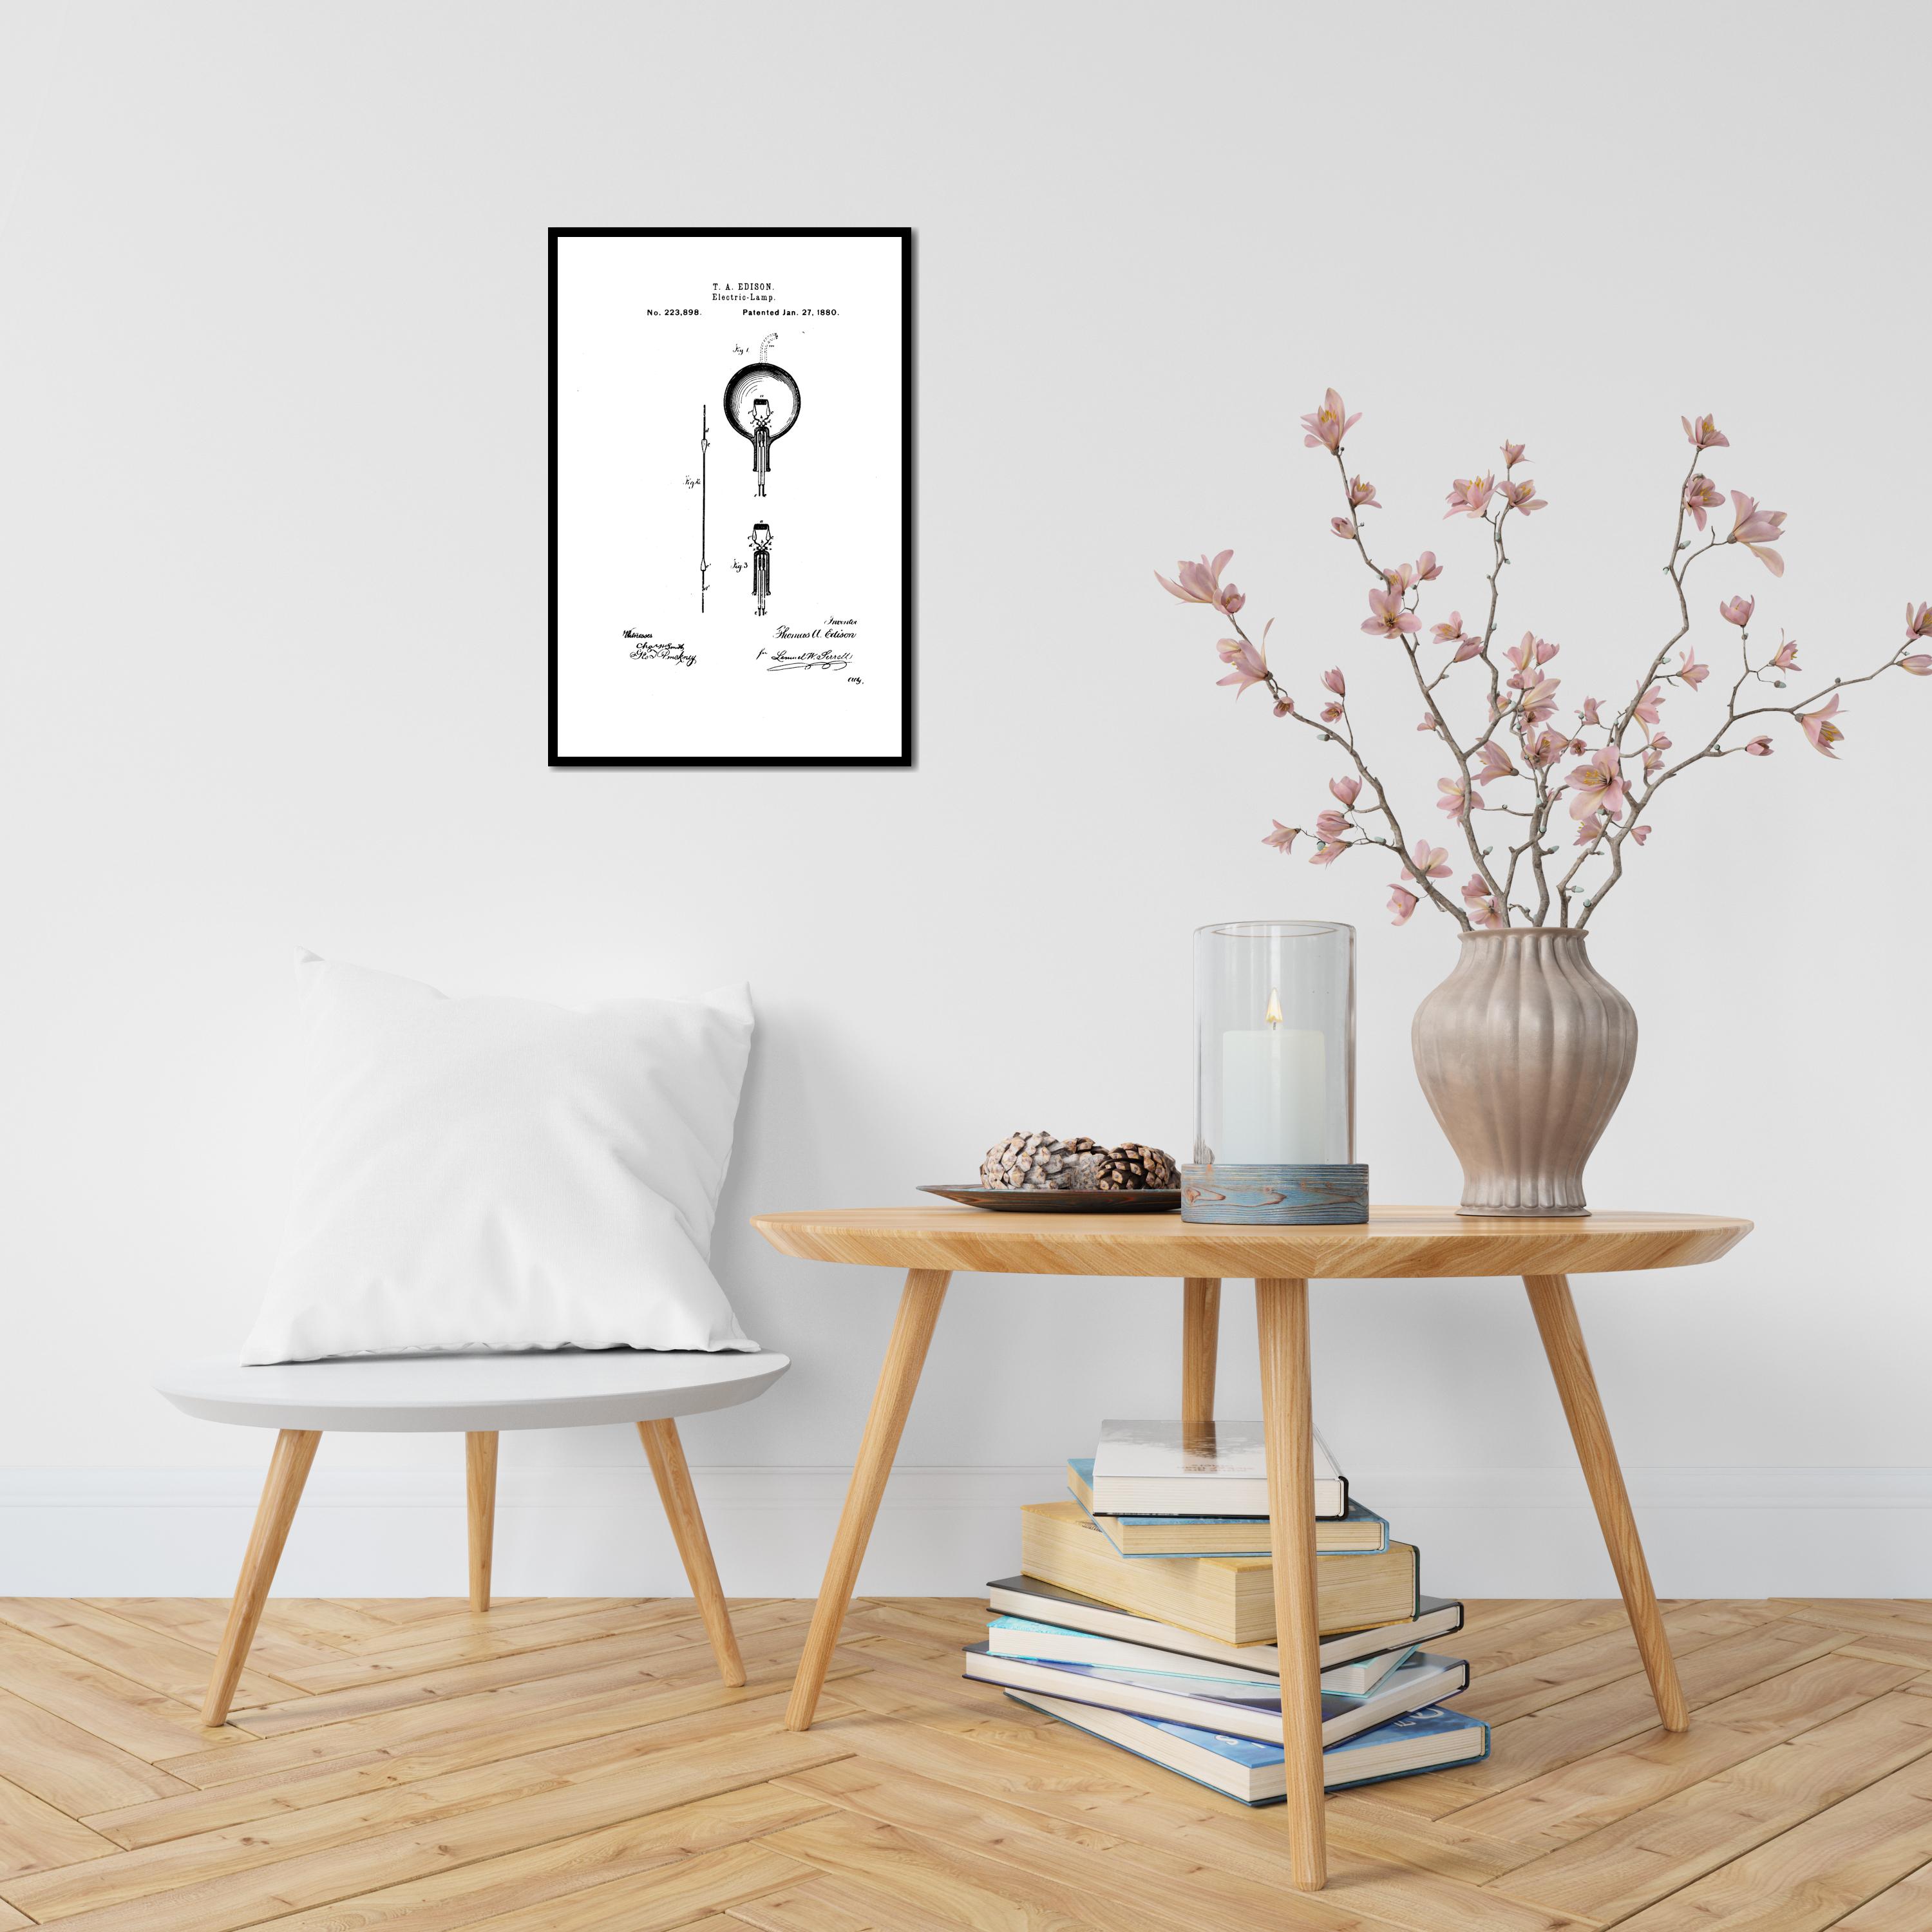 Eletric Lamp Patent poster